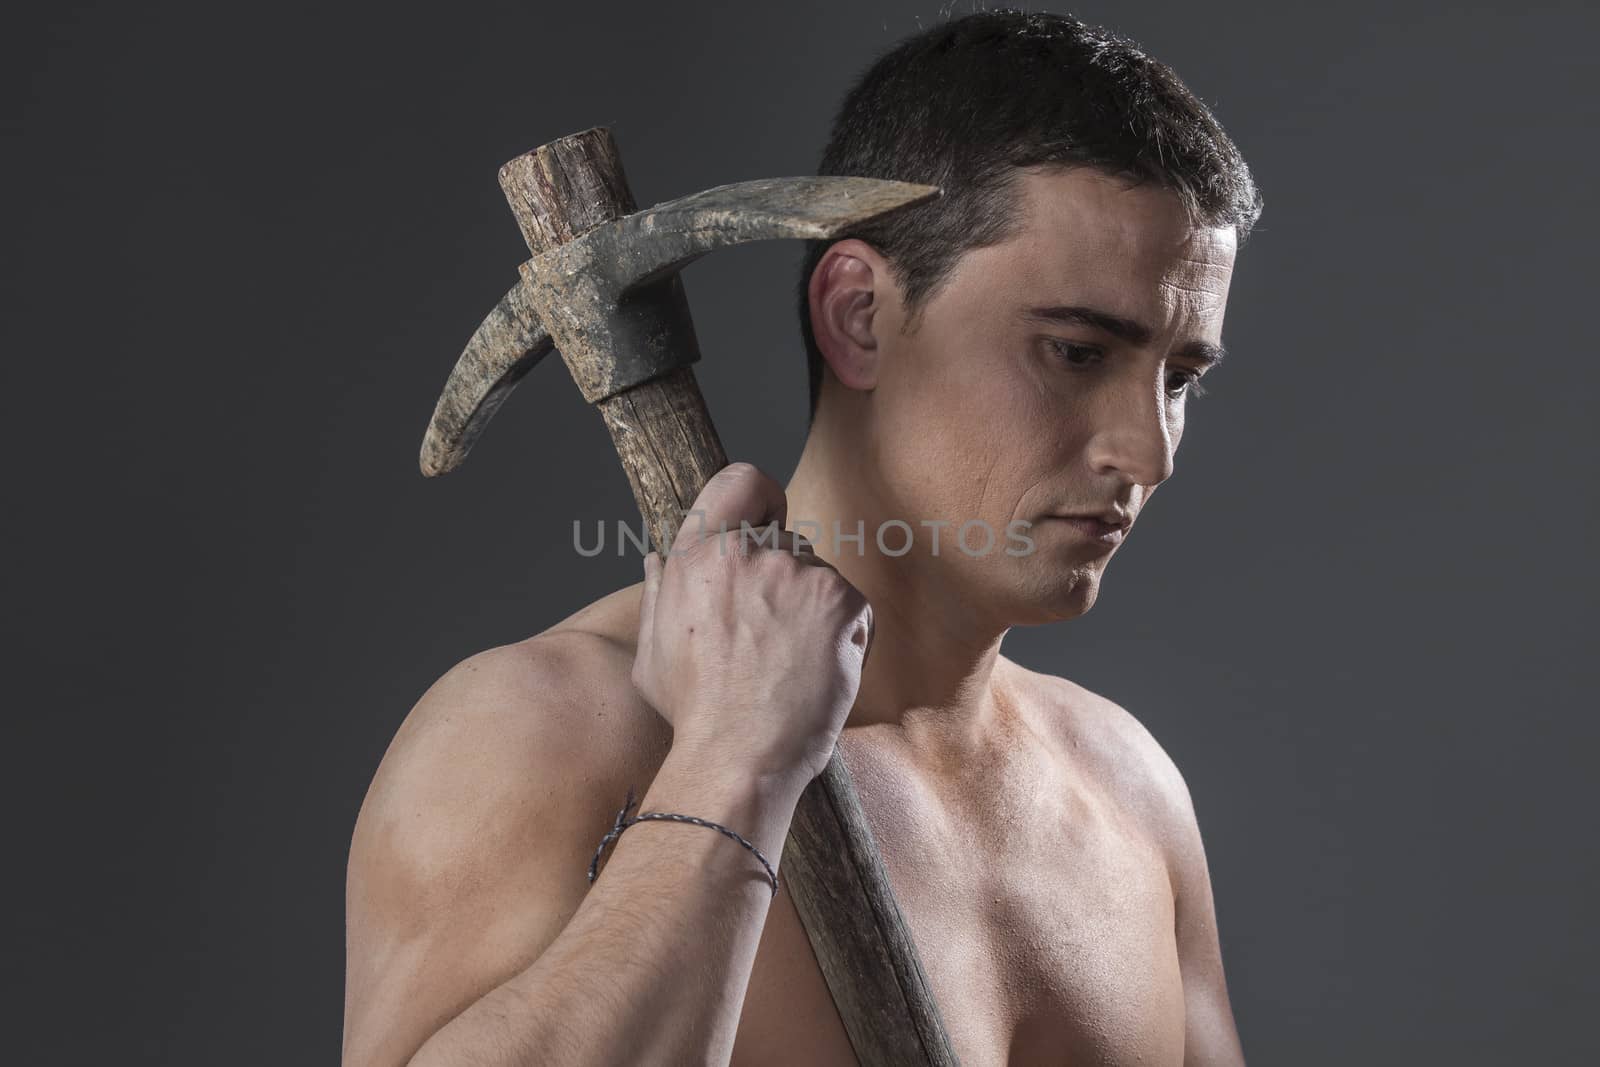 Tool, Construction worker portrait holding a peak.